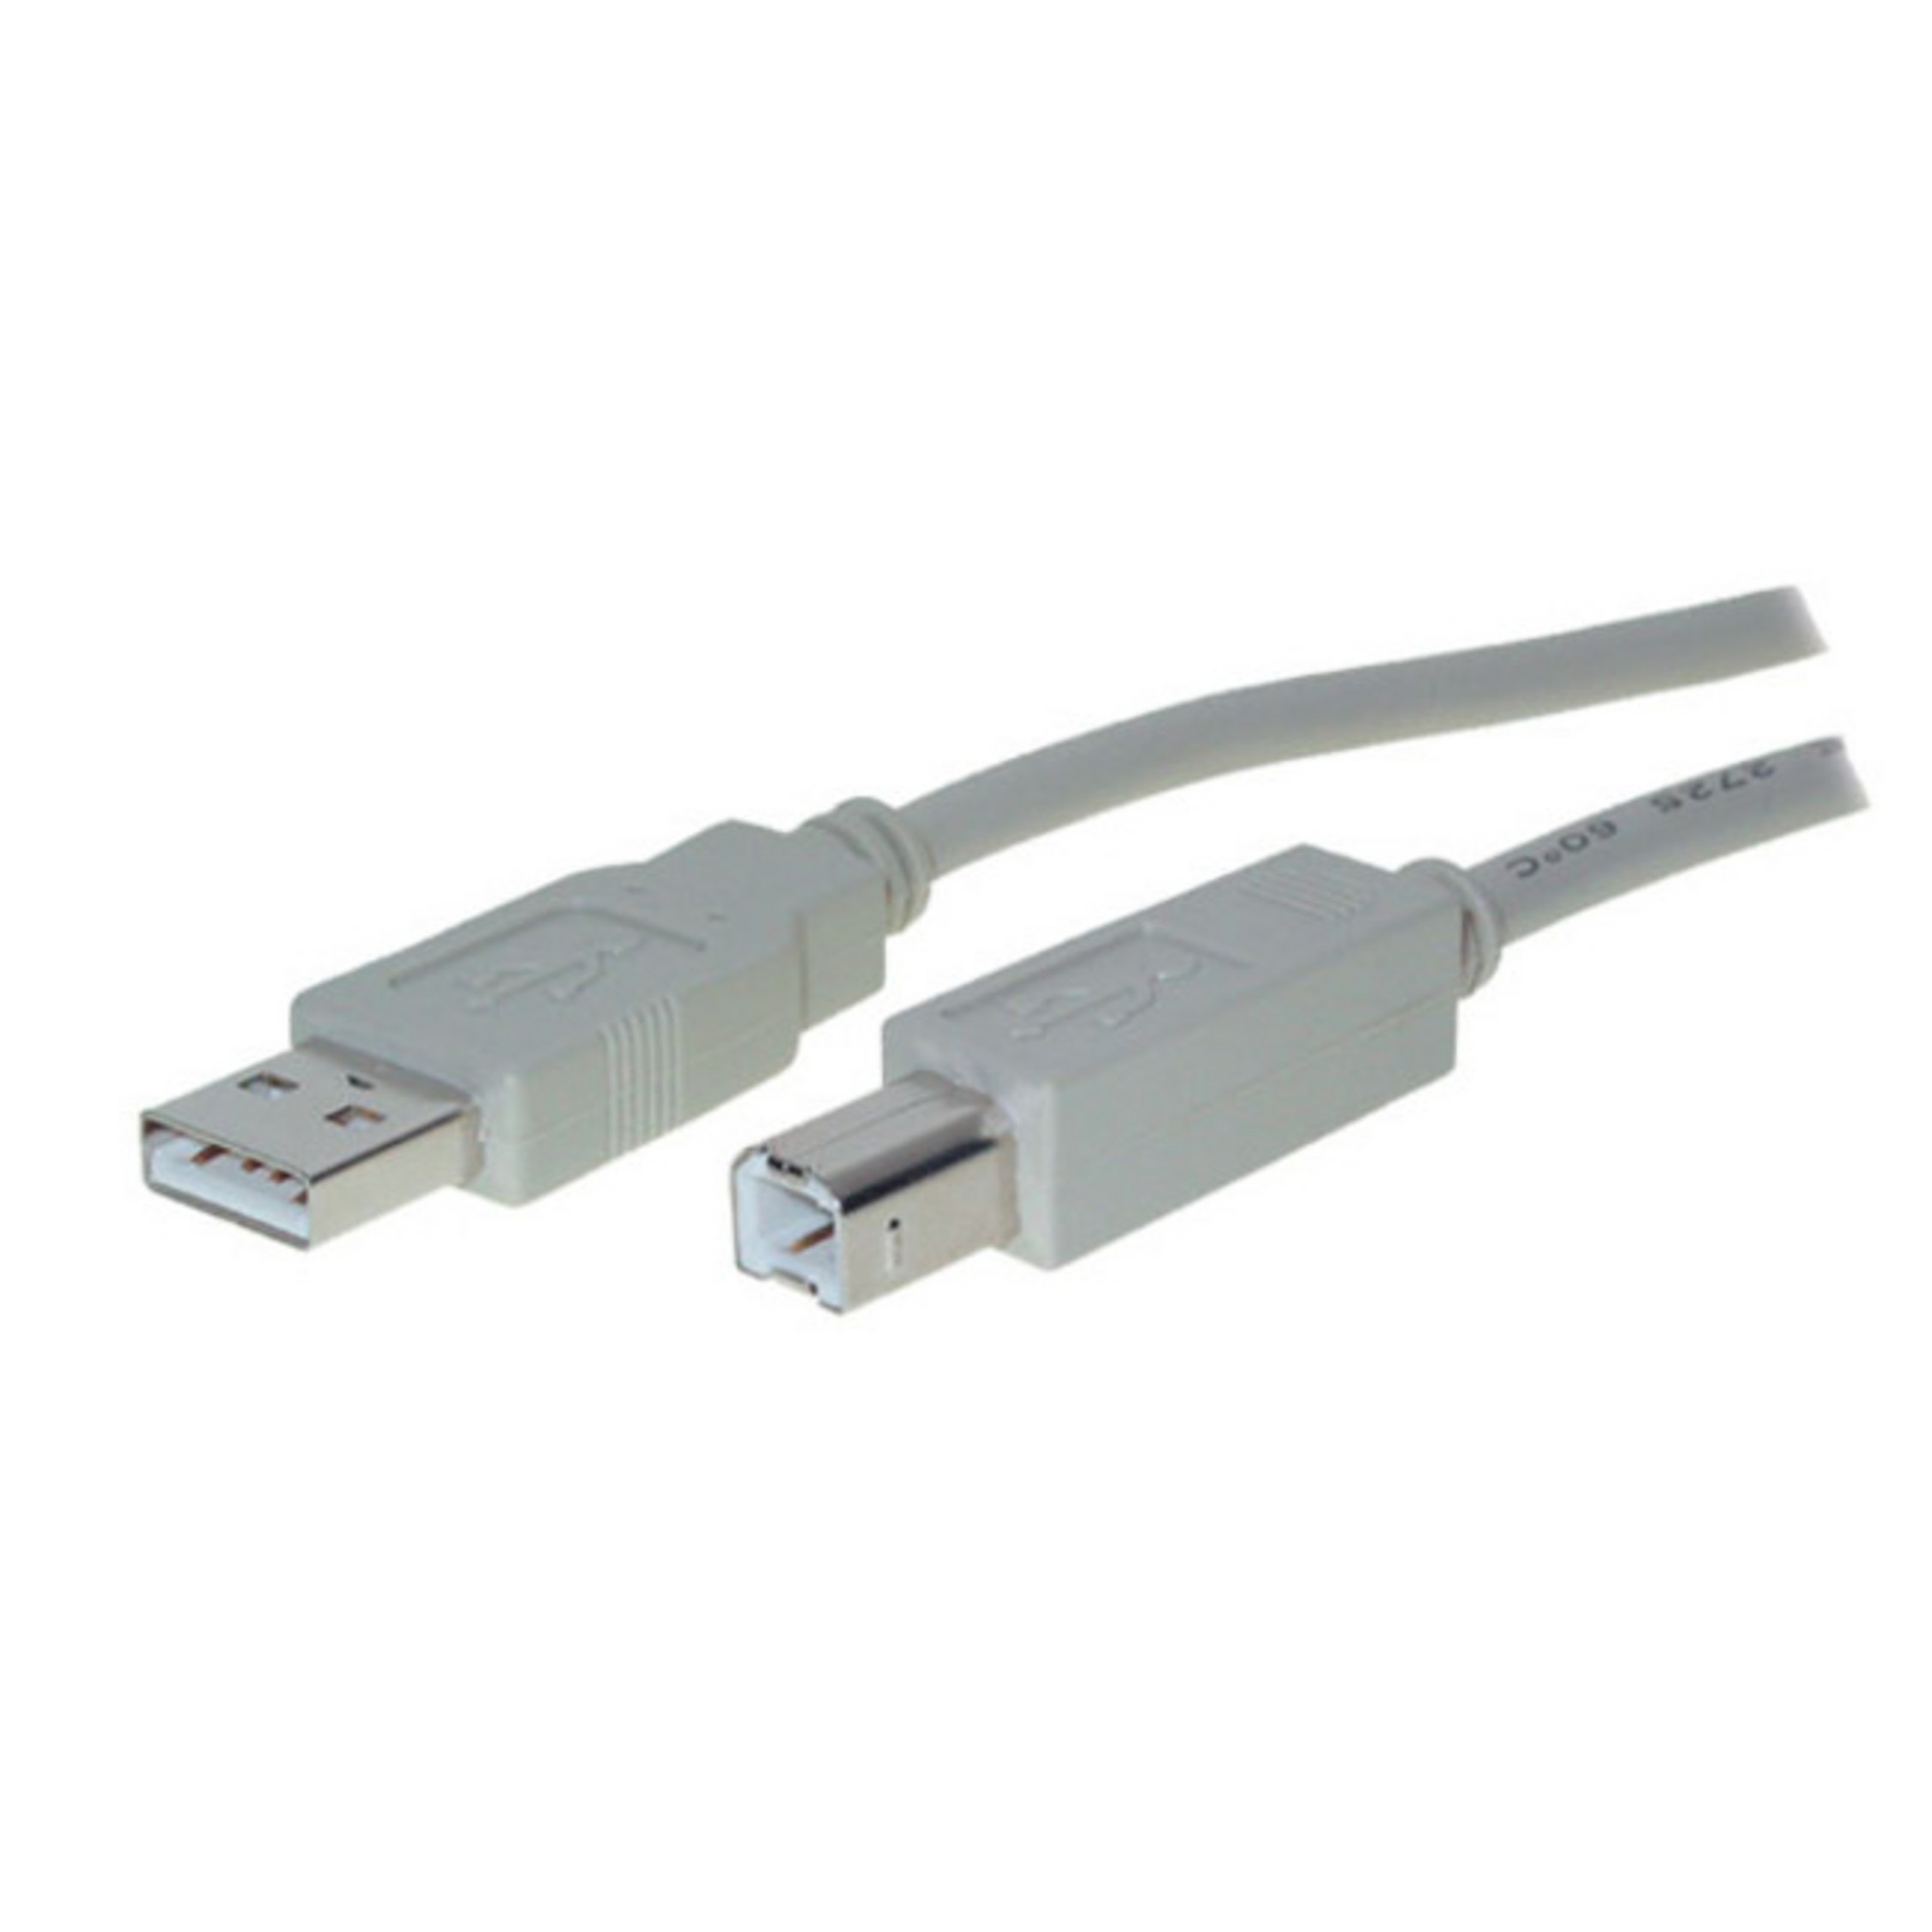 S/CONN MAXIMUM B USB CONNECTIVITY 0,5m USB Stecker Kabel Kabel USB 2.0 A Stecker 